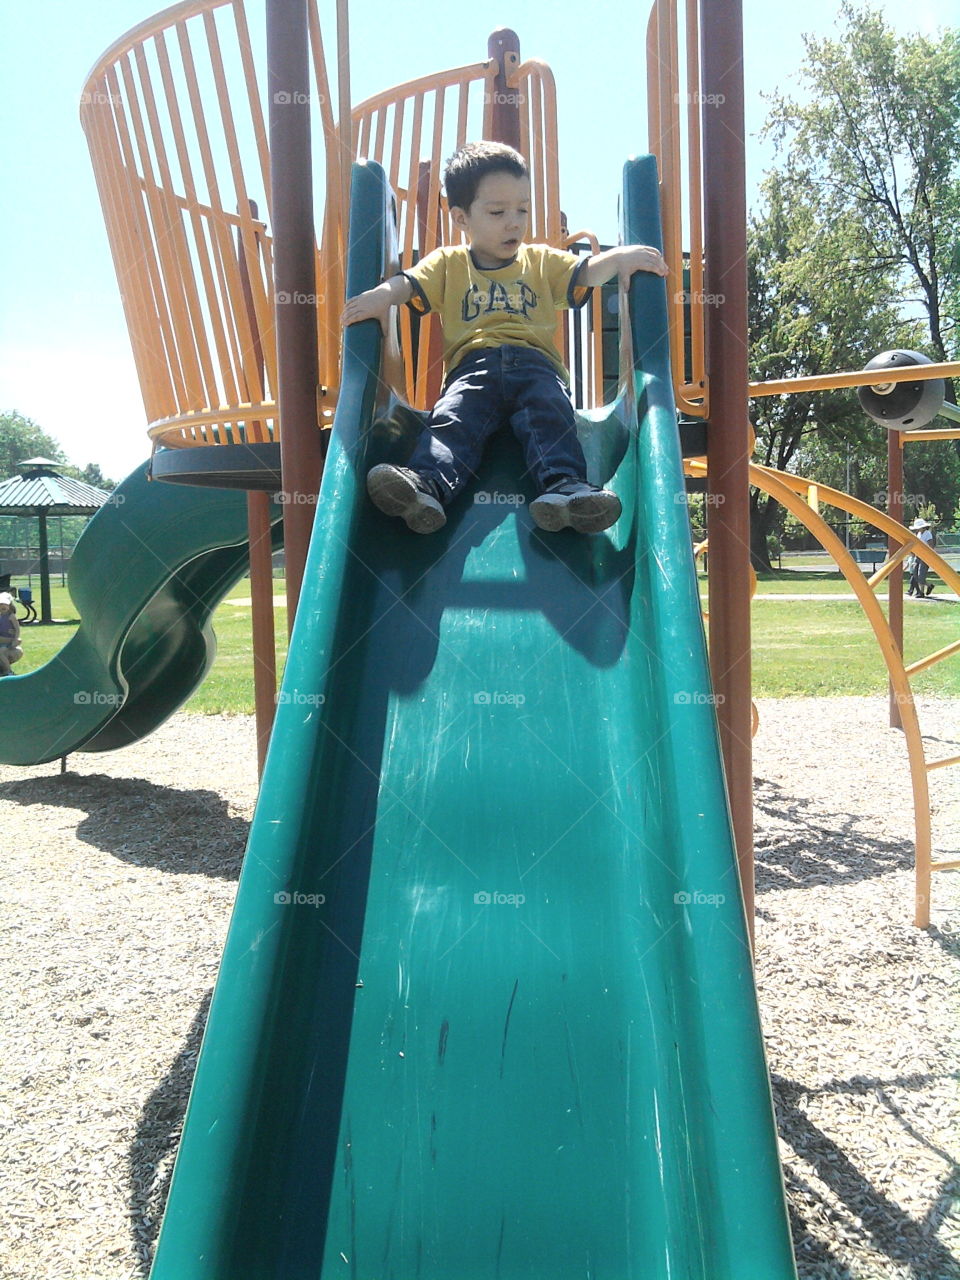 Slide, Playground, Child, Swing, Leisure